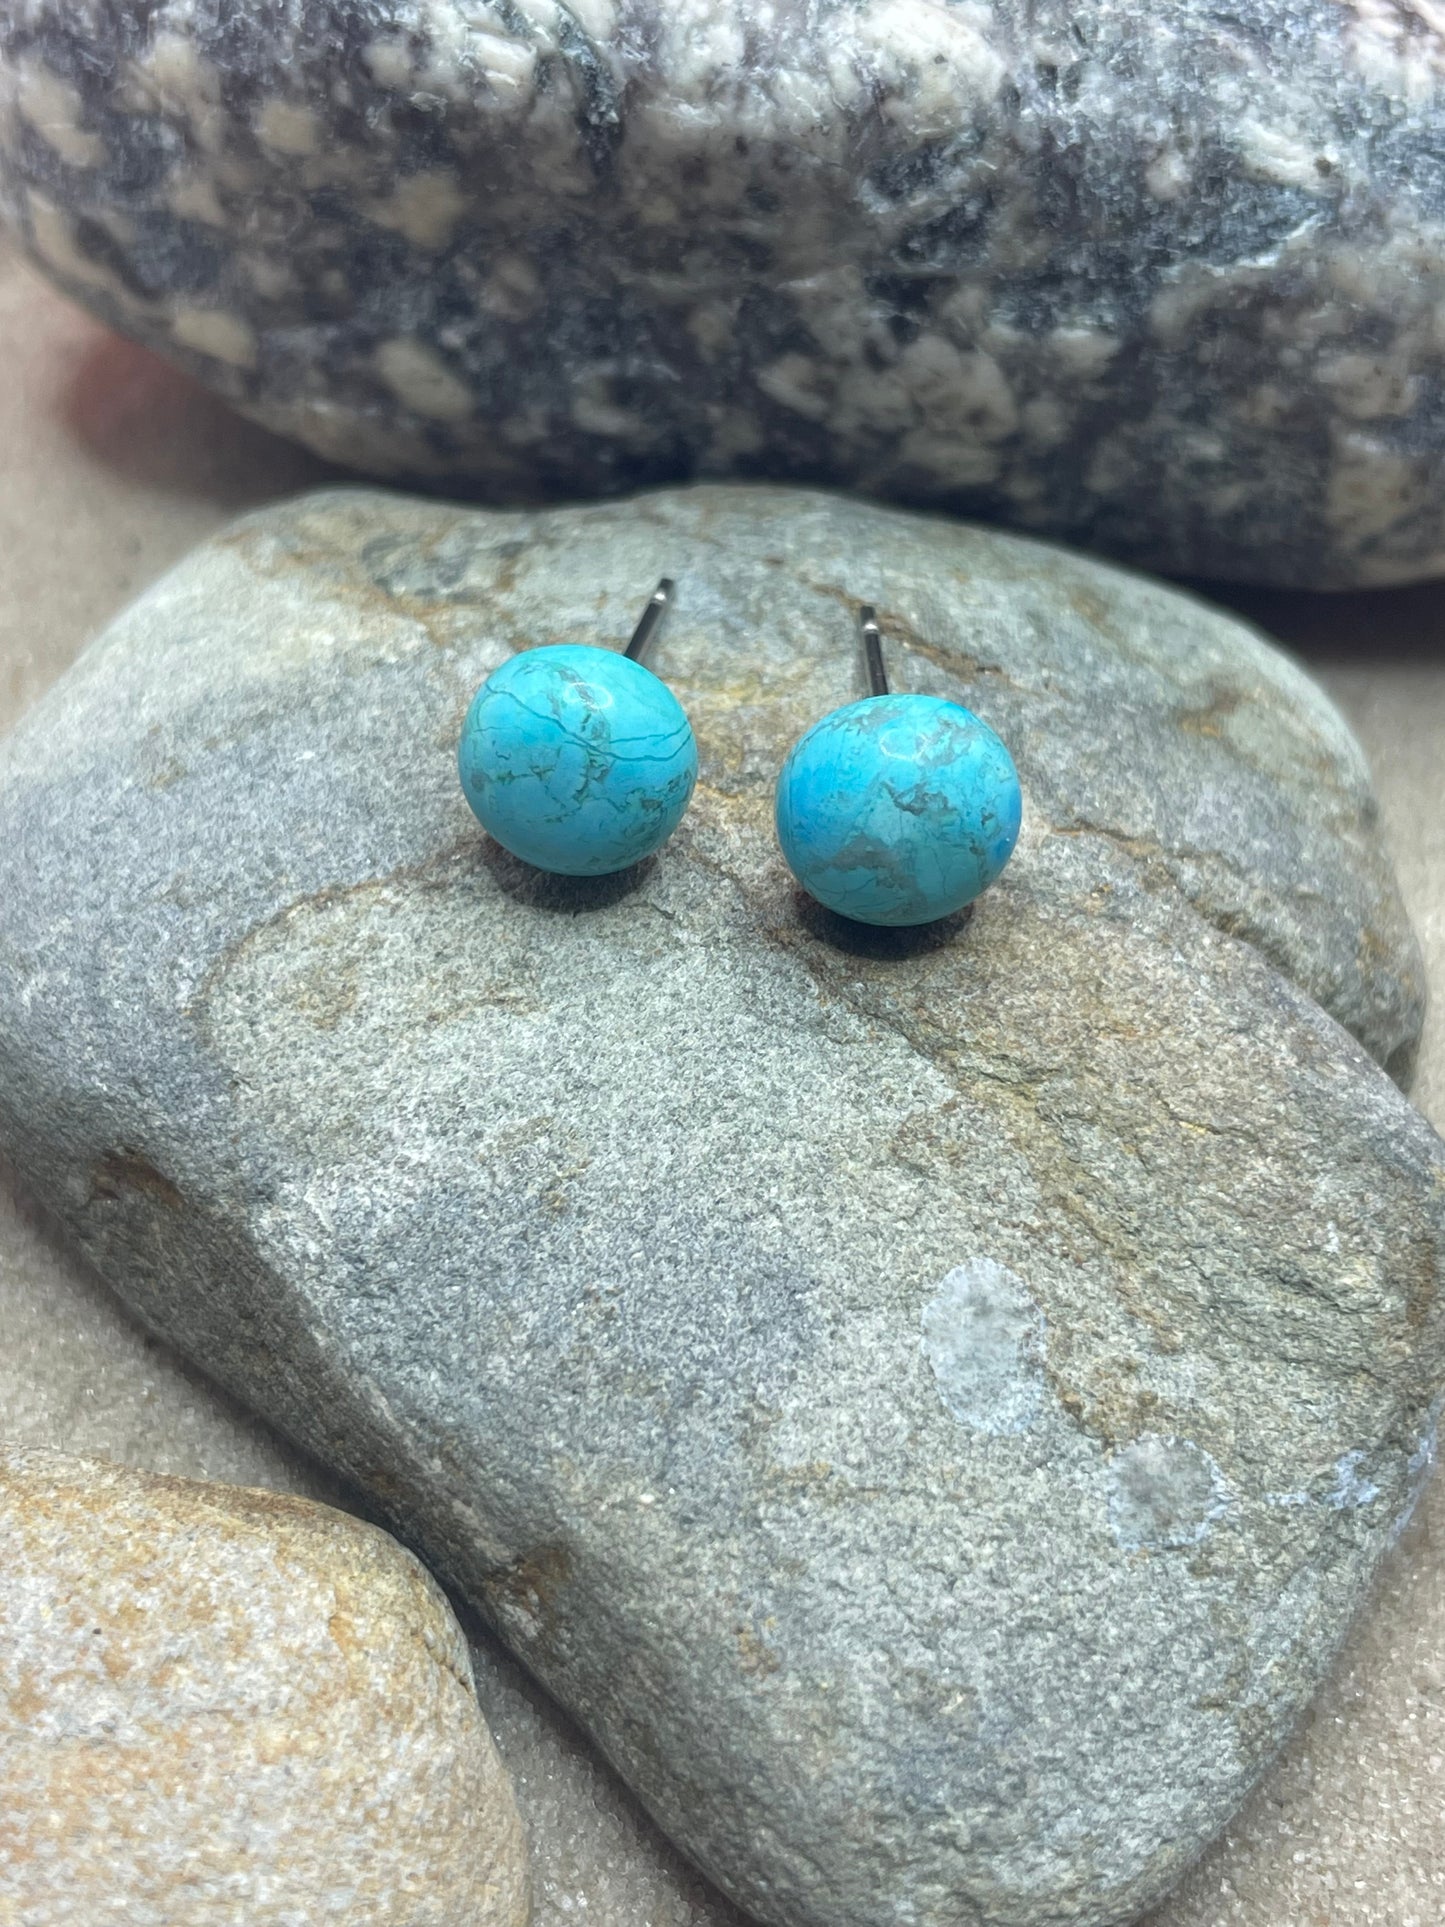 Turquoise Gemstone Stud Earrings